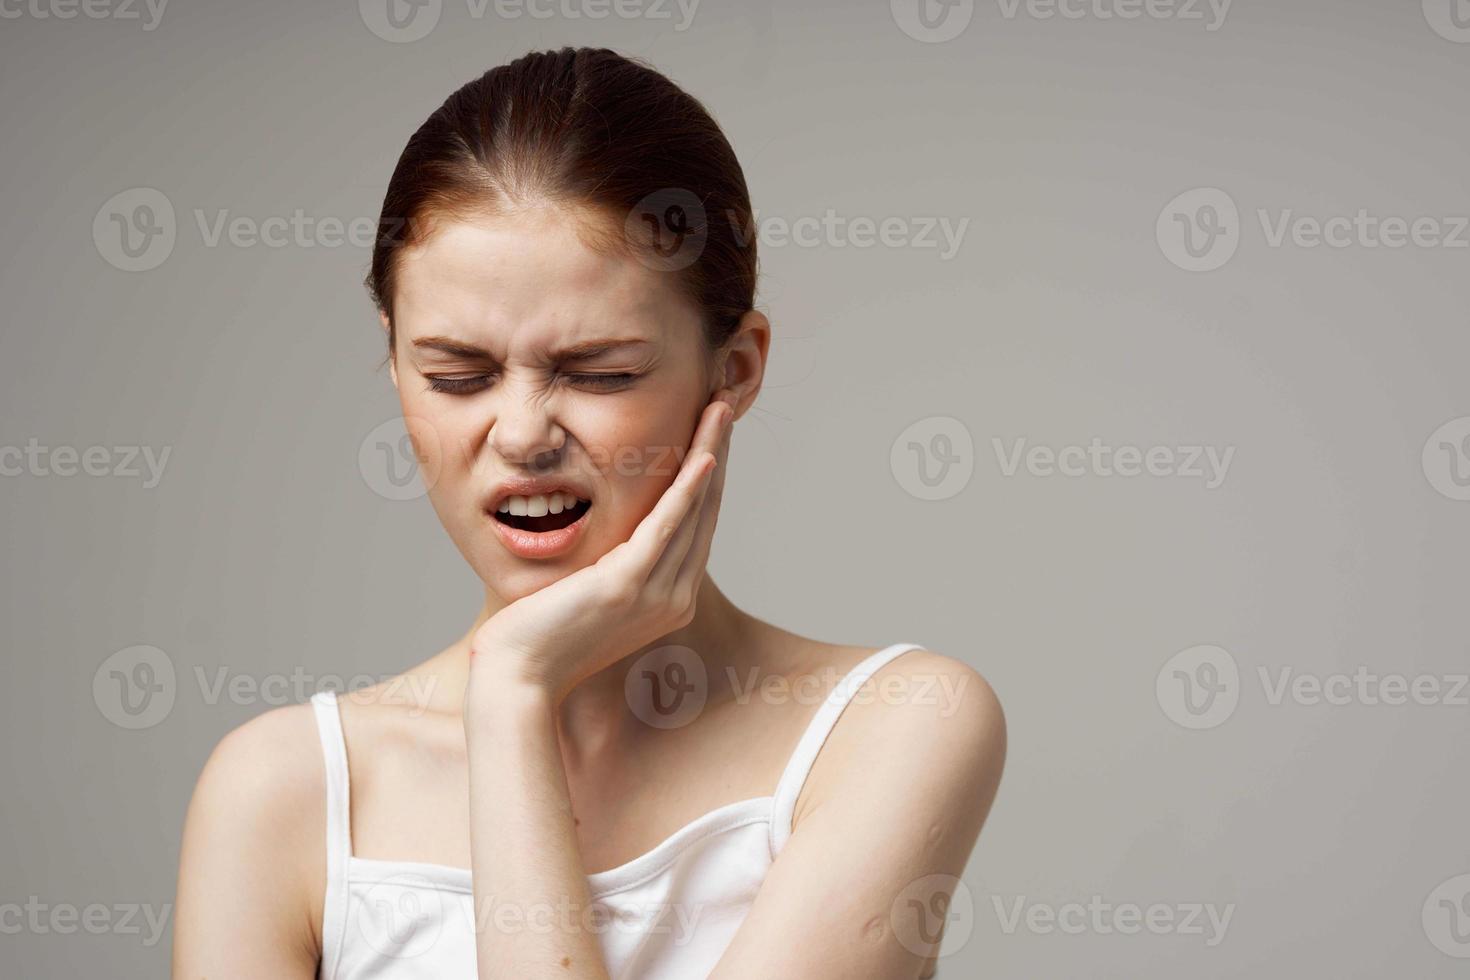 woman toothache health problems disorder studio treatment photo